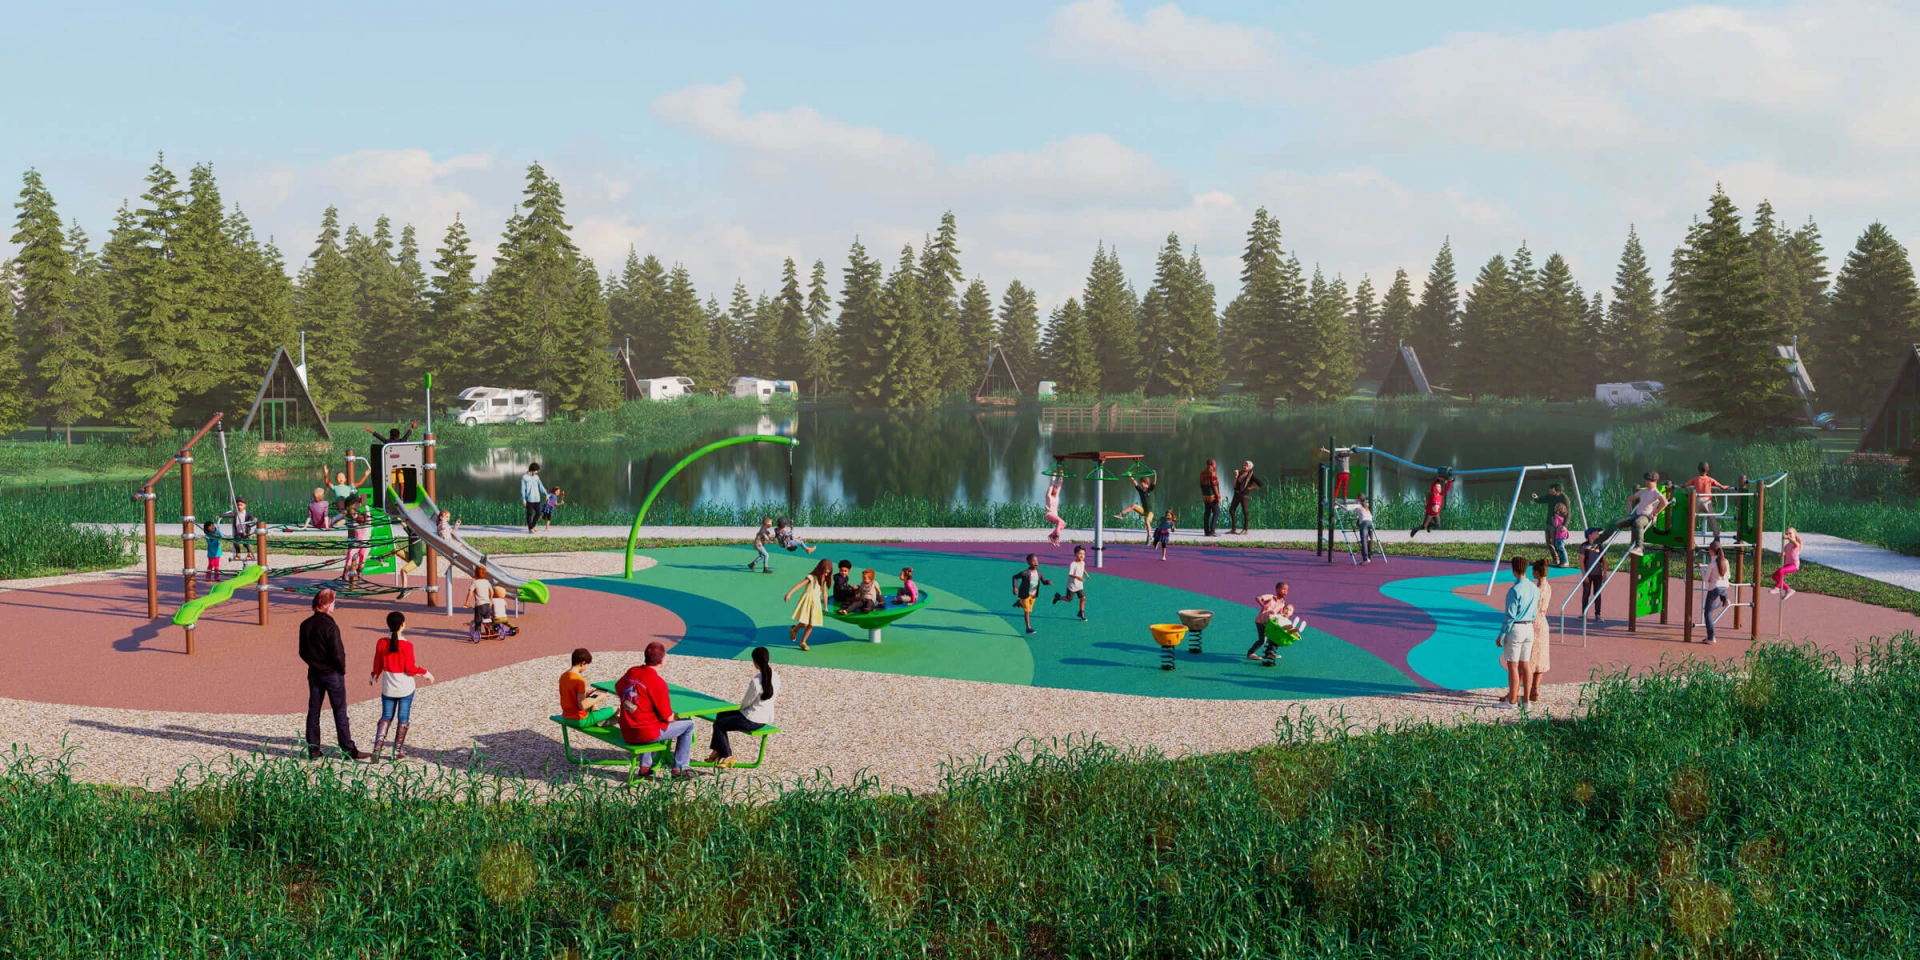 Design idea of a camping ground playground